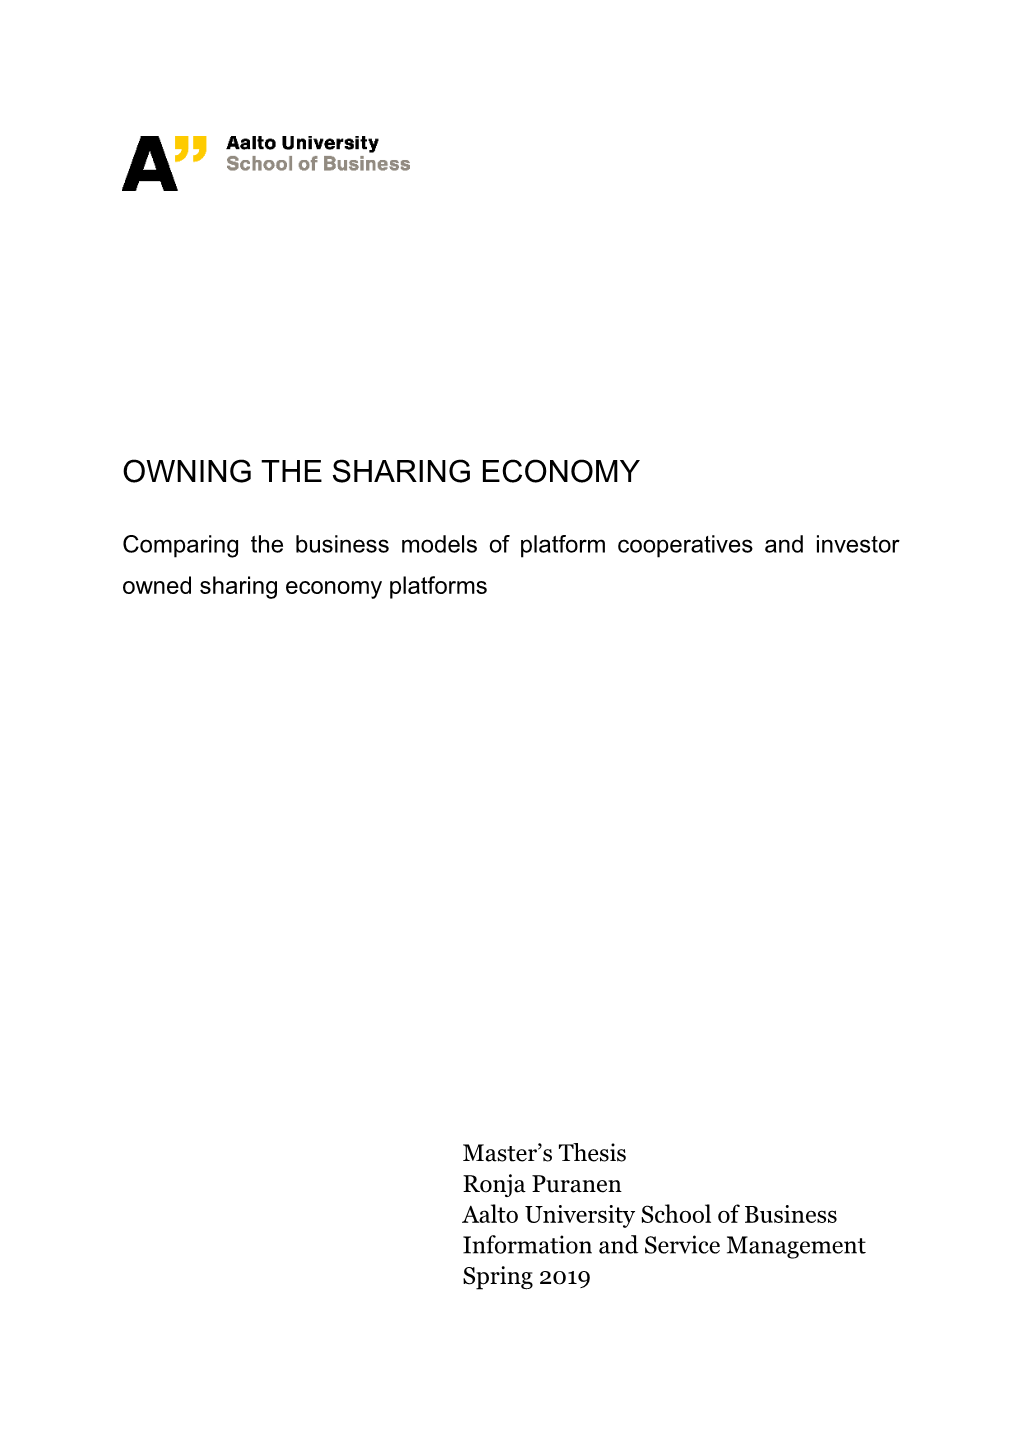 Owning the Sharing Economy